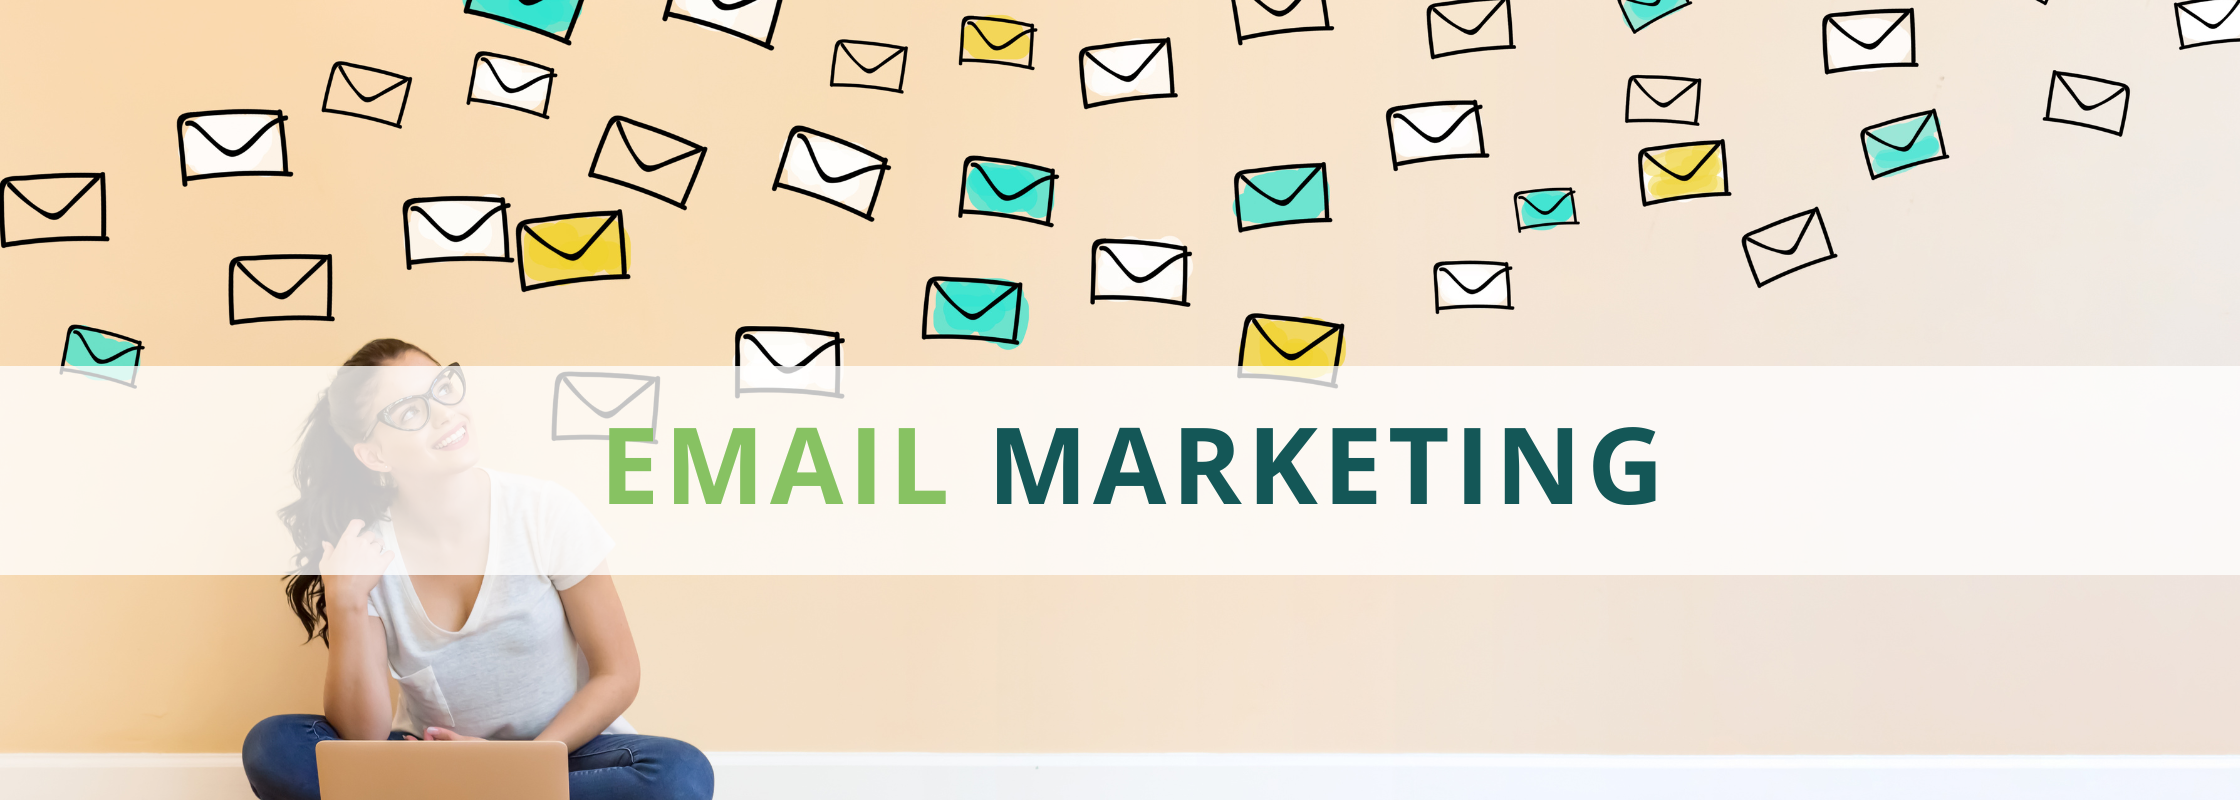 Email Marketing | Email Marketing Consultant | Heath Marketing